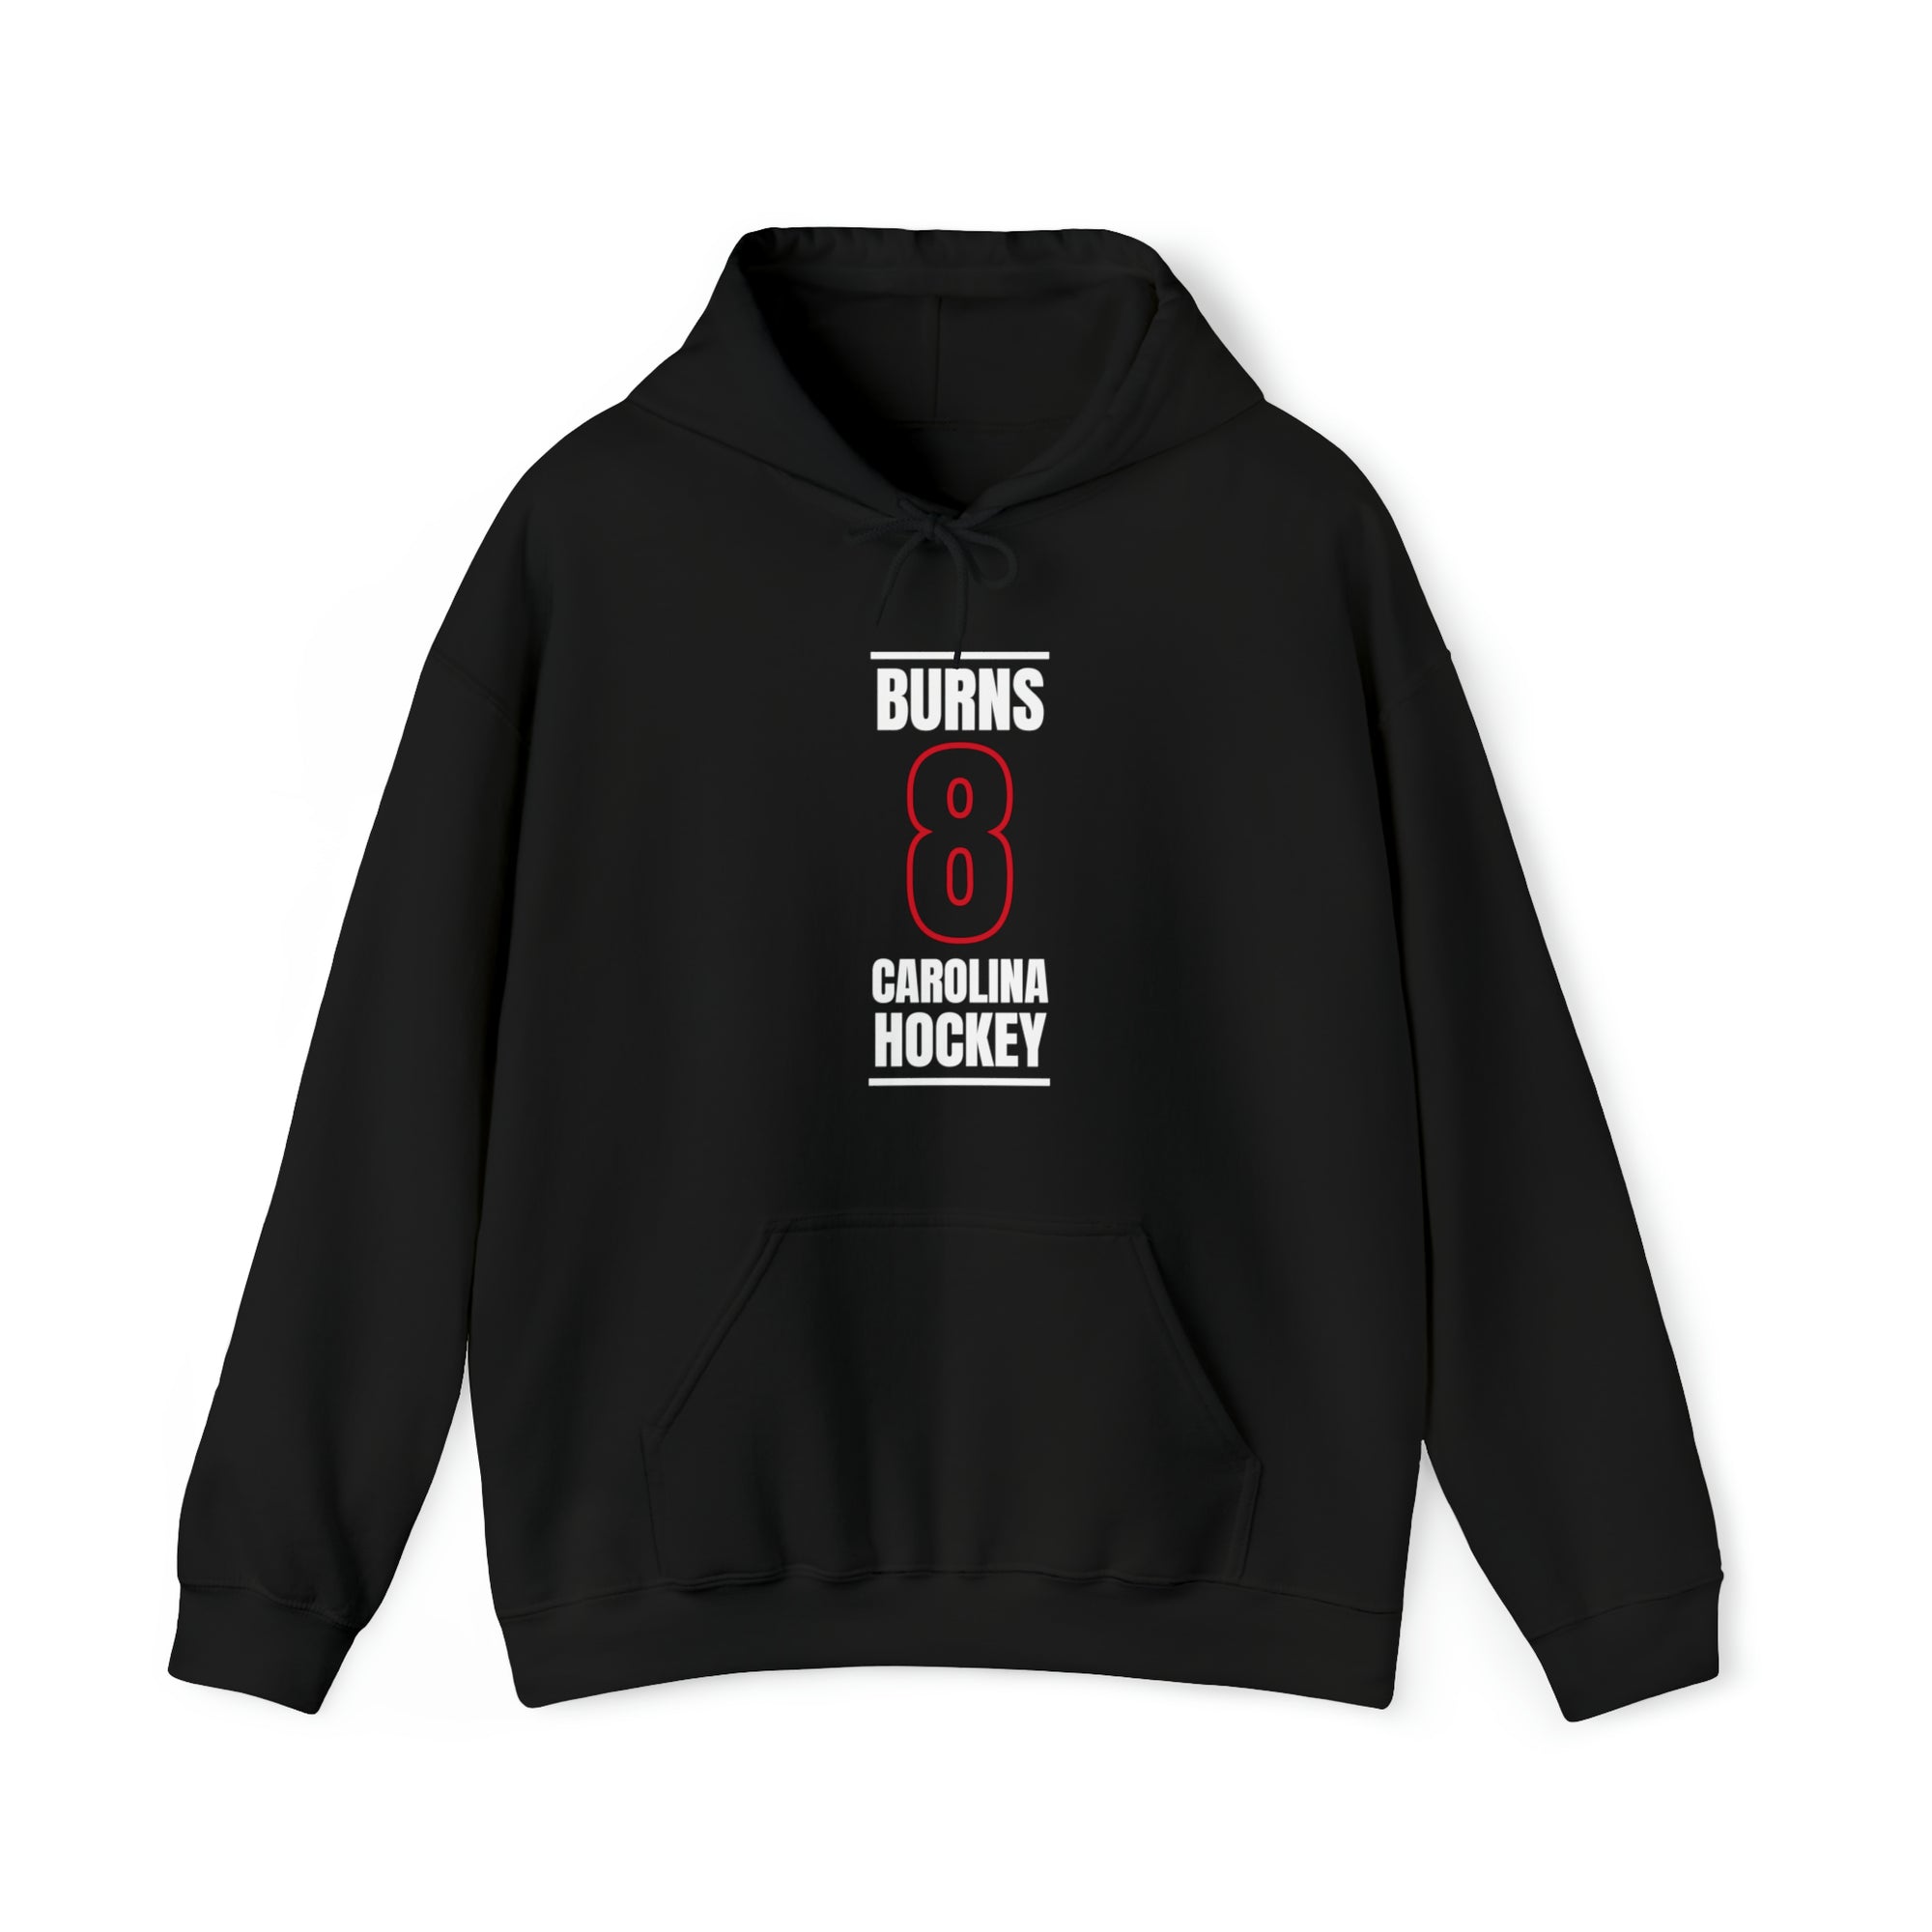 Burns 8 Carolina Hockey Black Vertical Design Unisex Hooded Sweatshirt